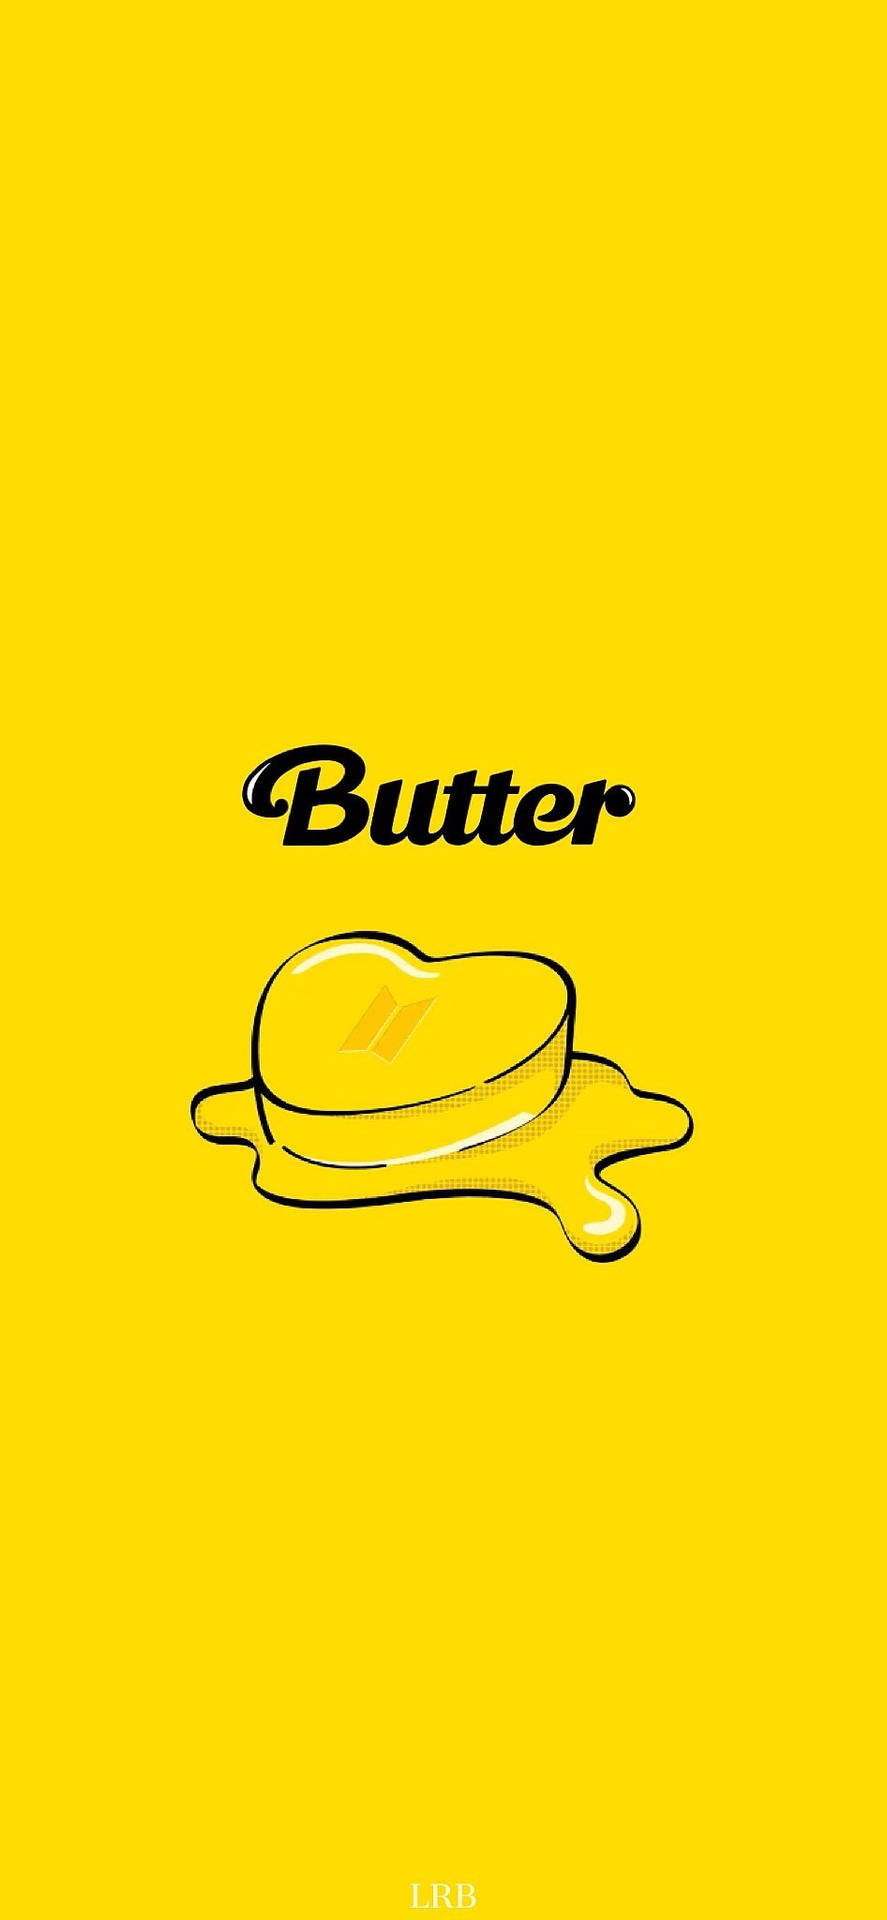 Free Bts Butter Wallpaper Downloads, [100+] Bts Butter Wallpapers for FREE  